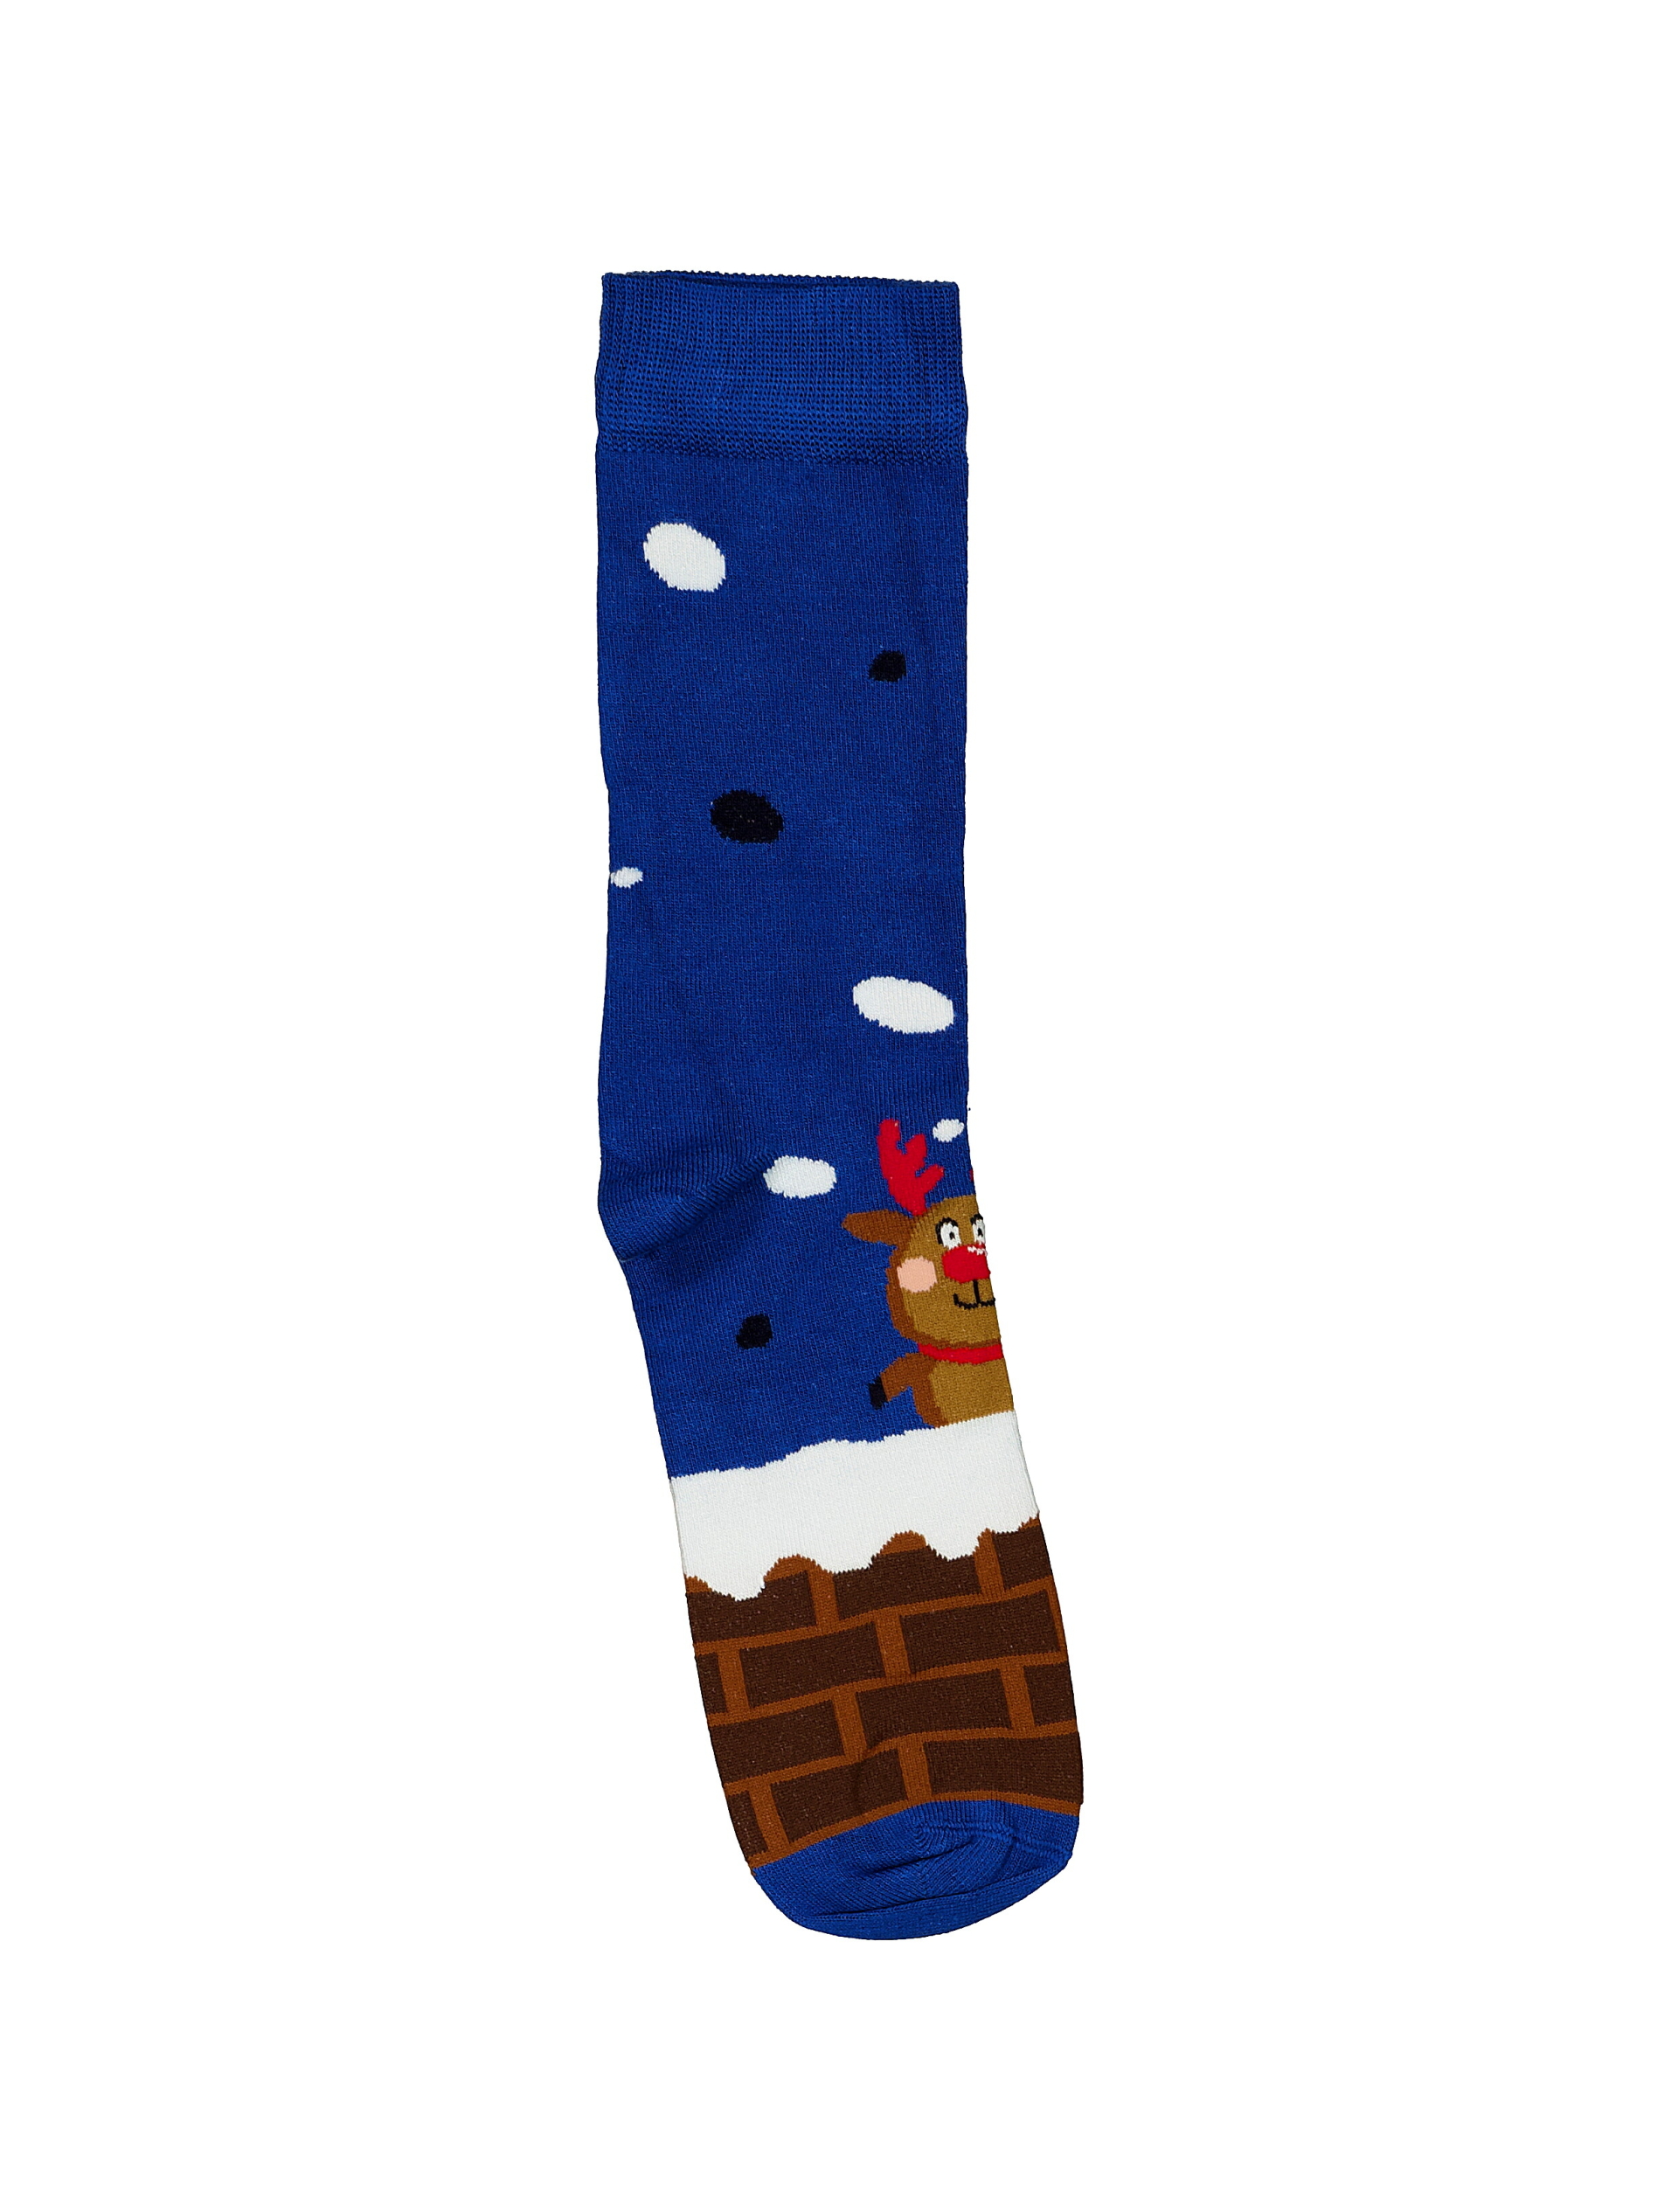 Lindbergh Socken blau / blue